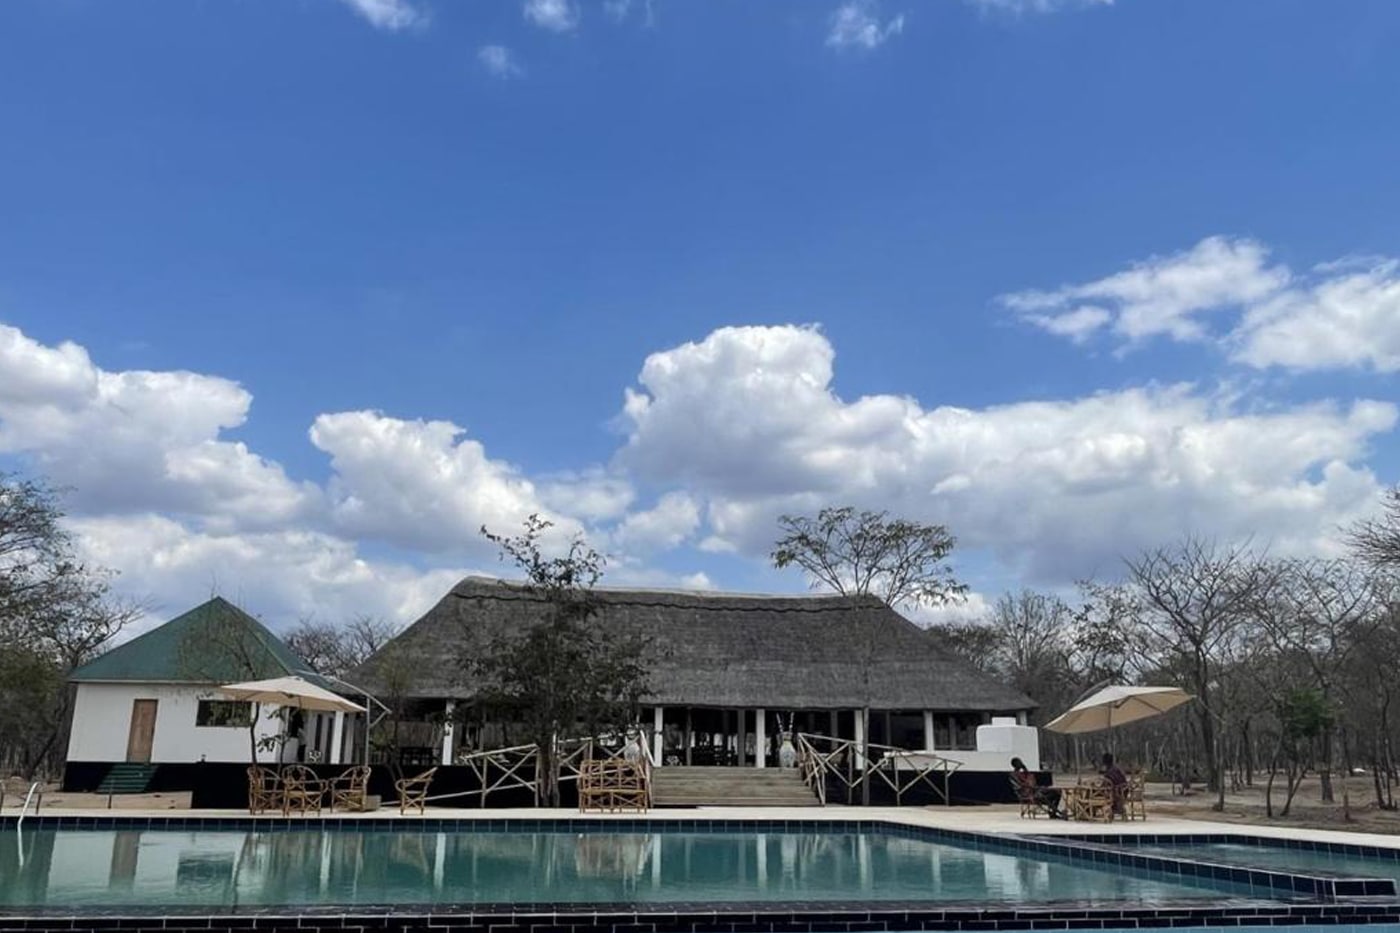 Camp atupele - accommodation in mikumi national park – easy travel tanzania